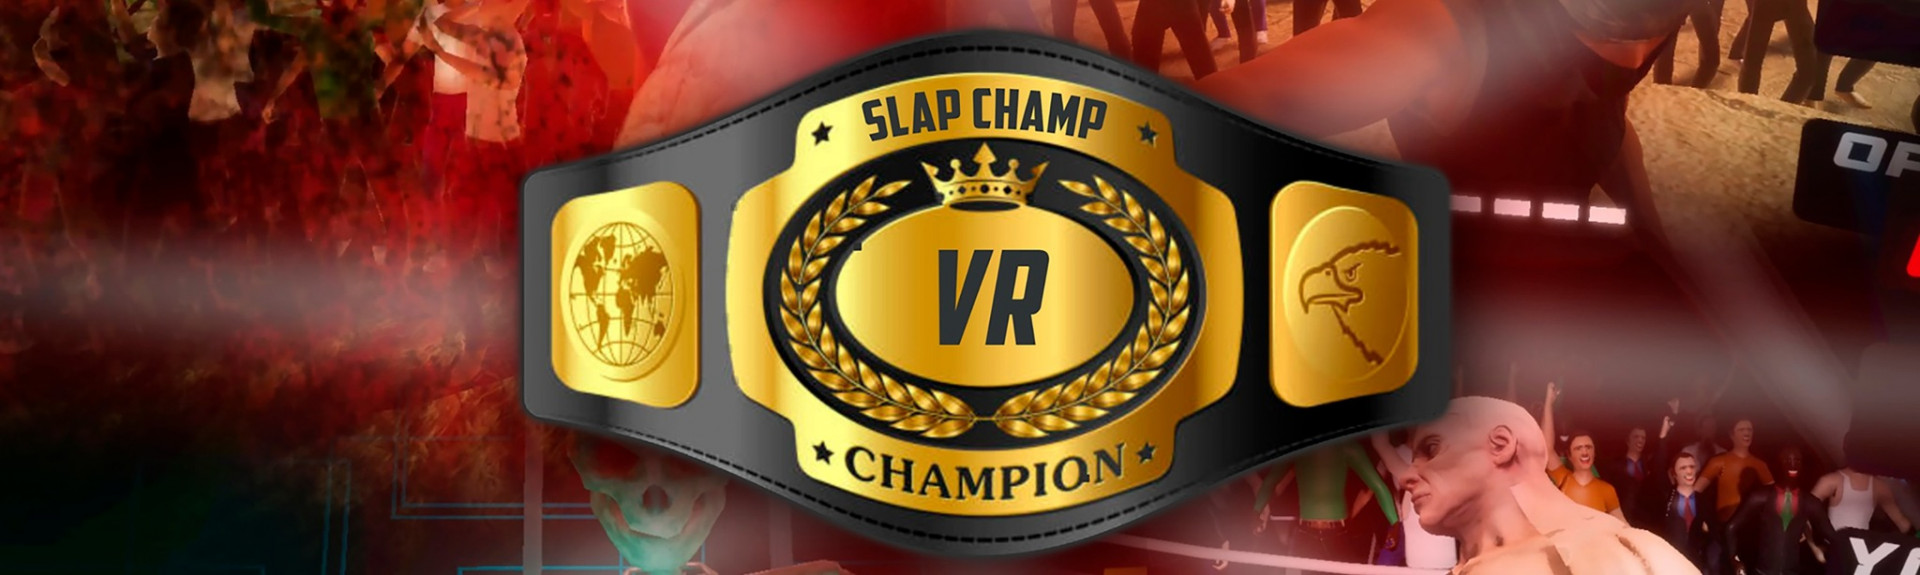 Slap Champ VR